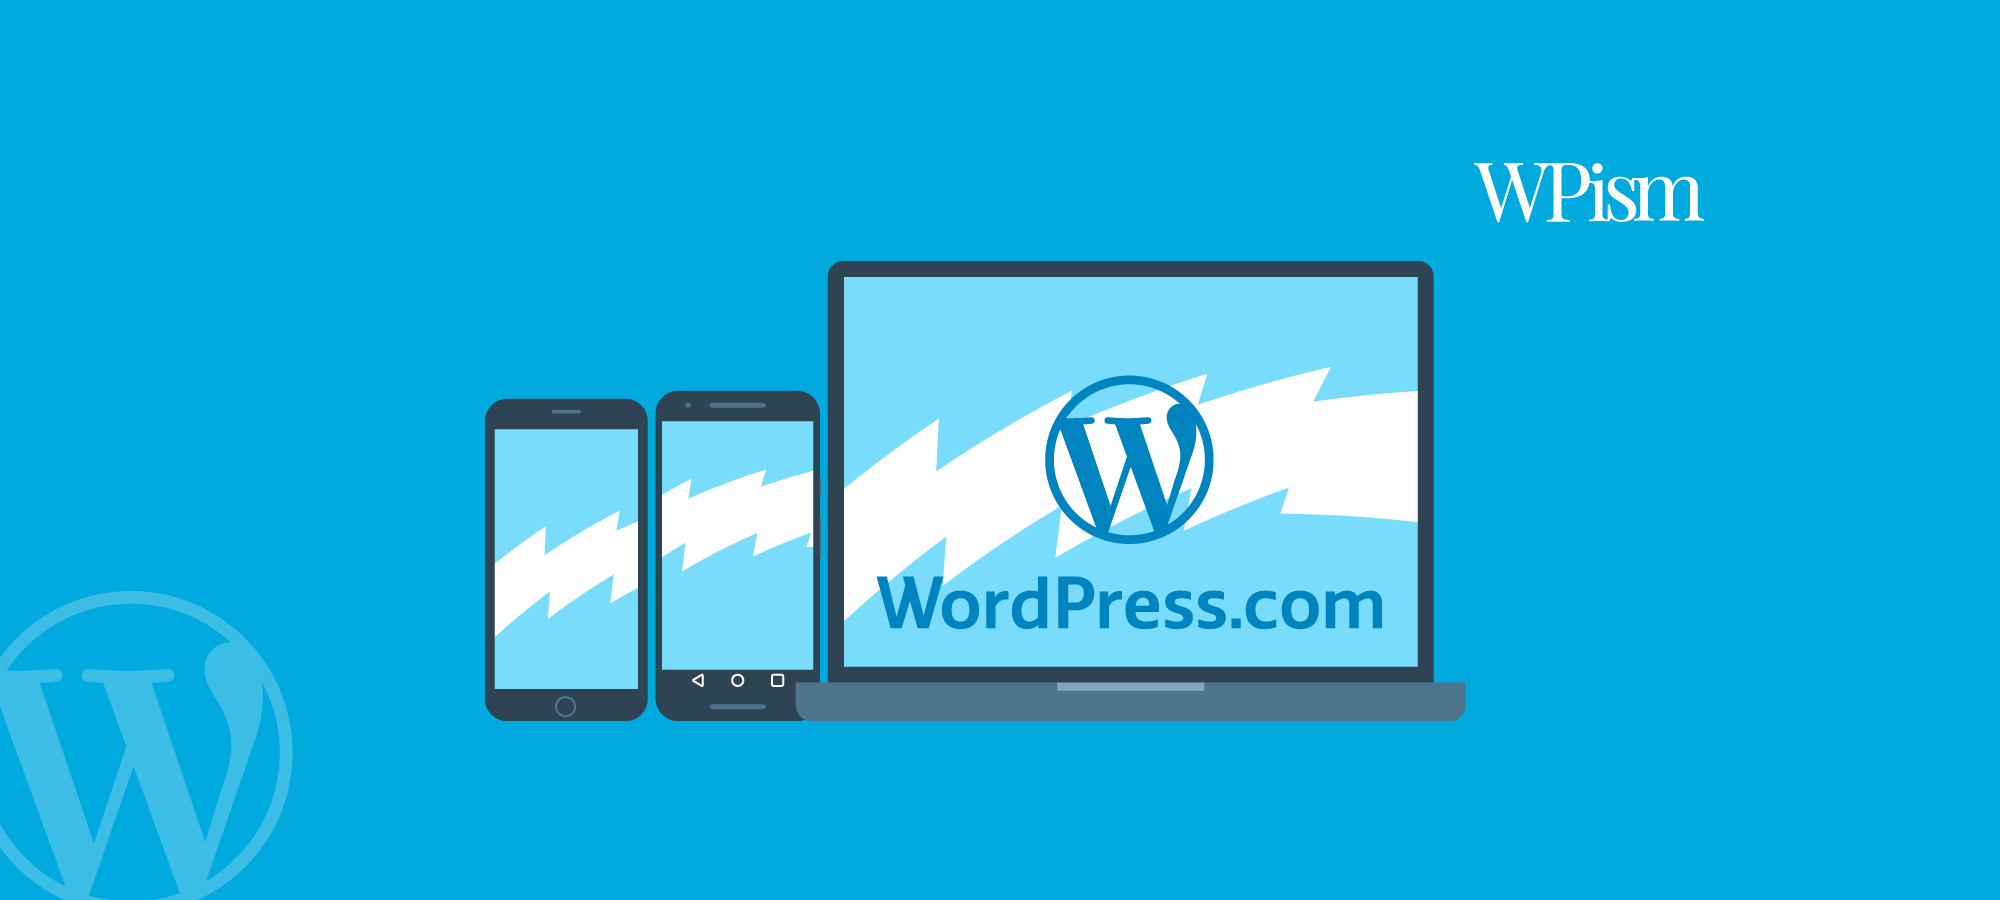 WordPress Desktop Application and New WordPress.com